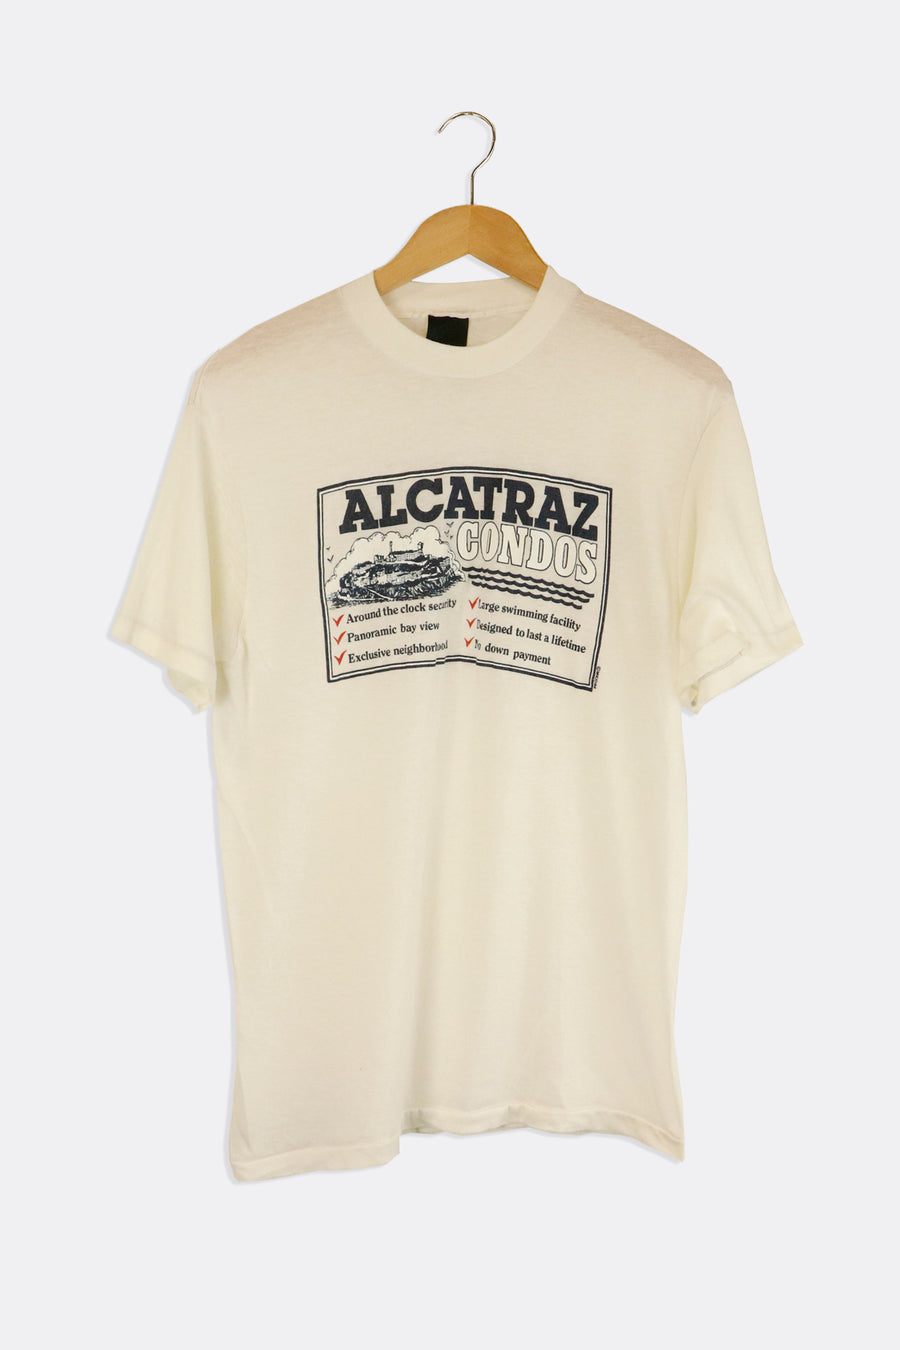 Vintage Alcatraz Condos Graphic T Shirt Sz S